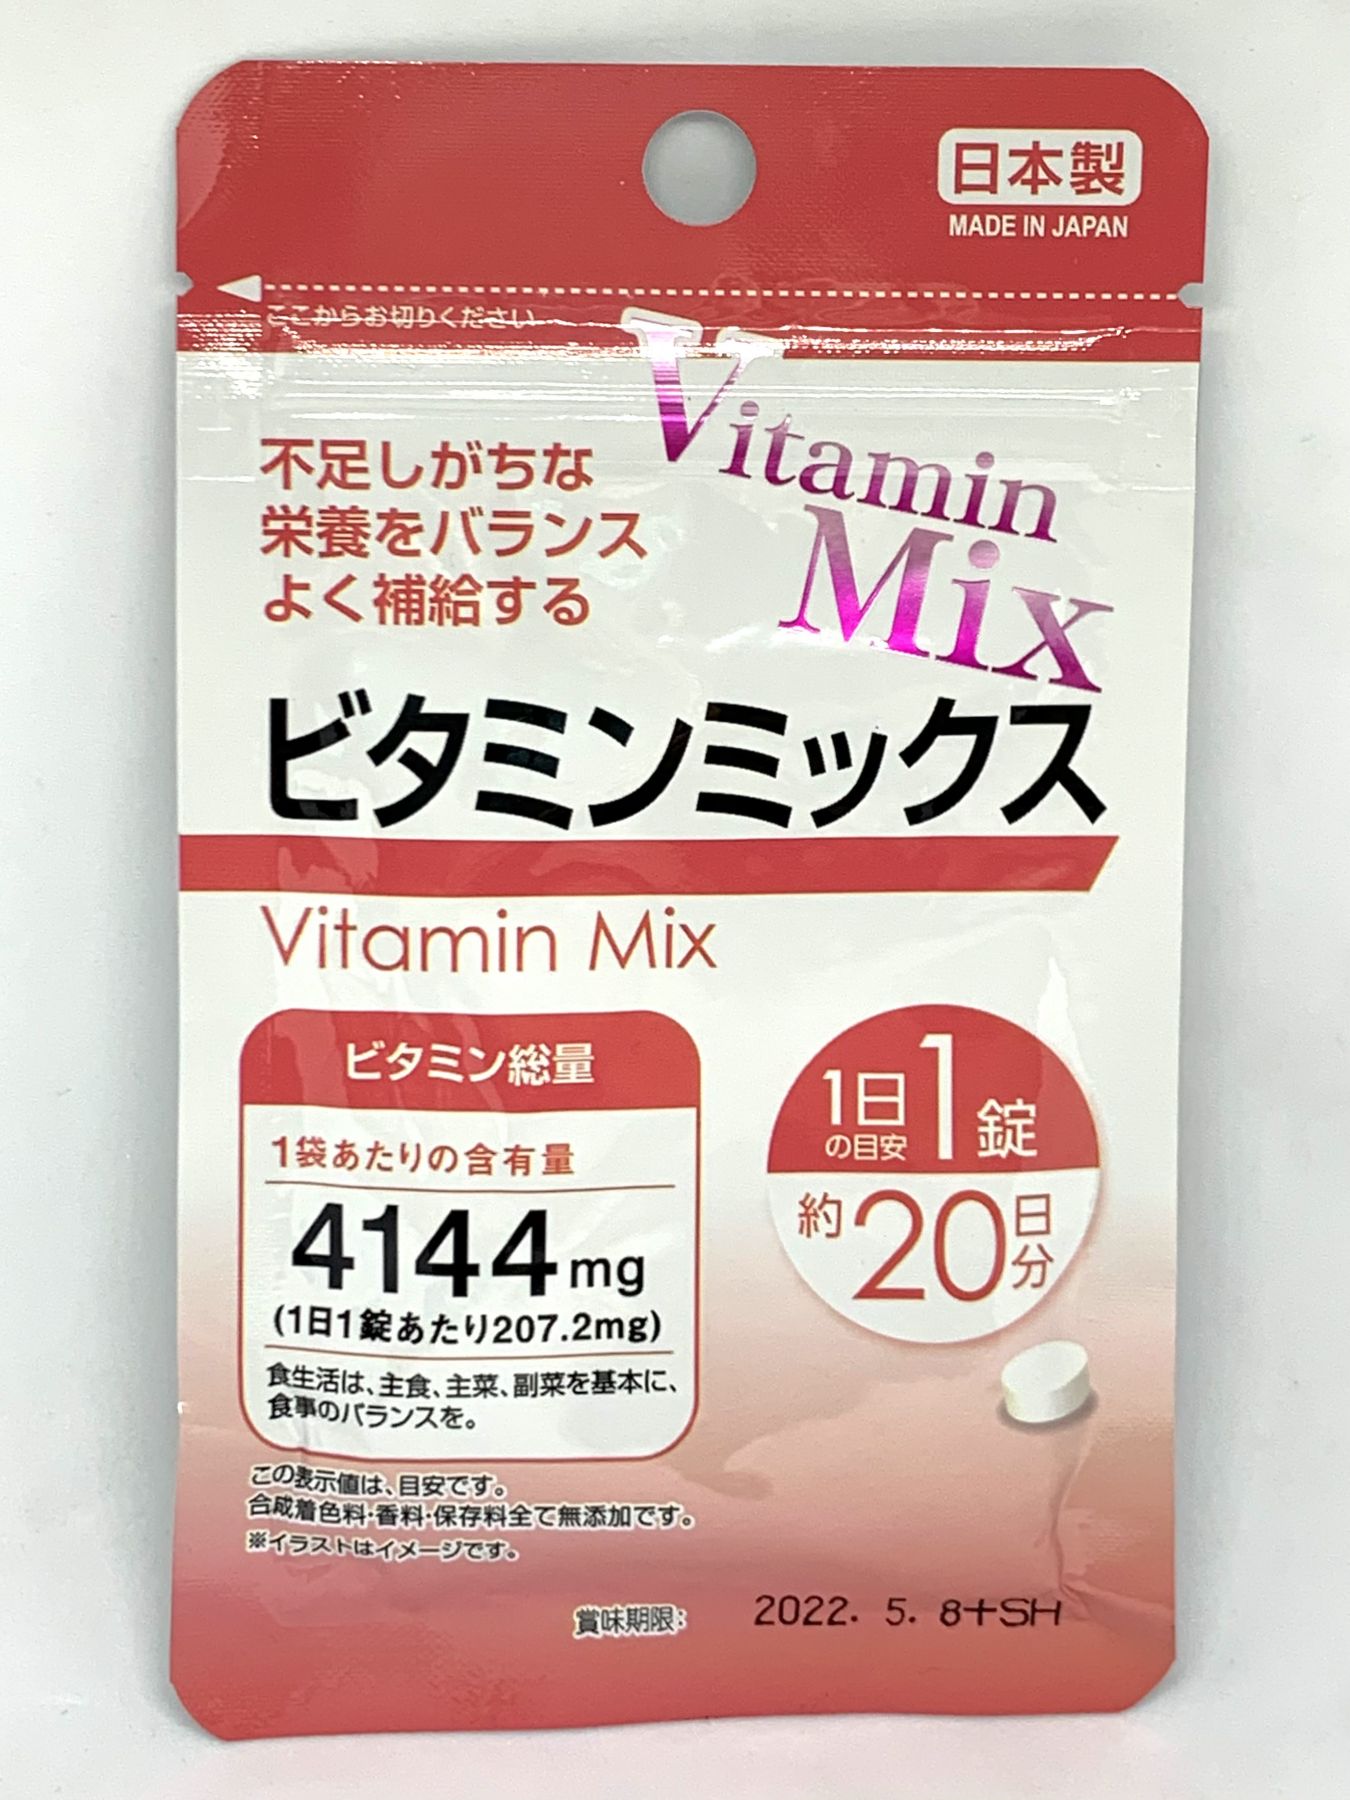 Vitamin mix. Микс витаминов.